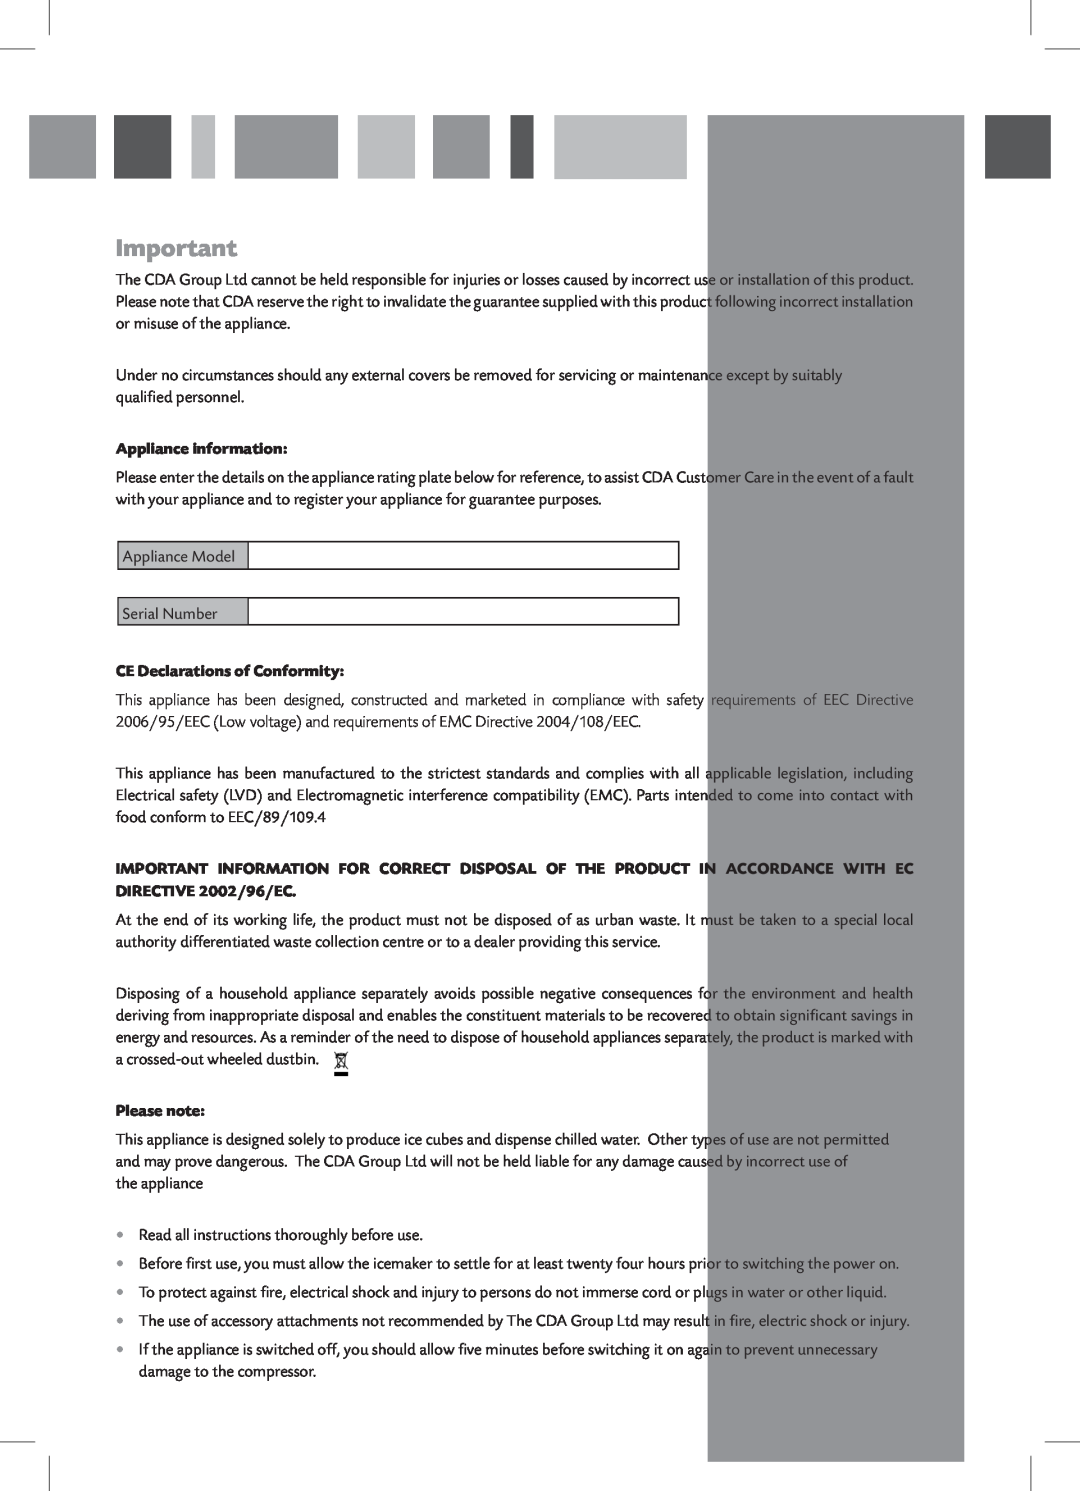 CDA FWV460 manual Appliance information, CE Declarations of Conformity, Please note 